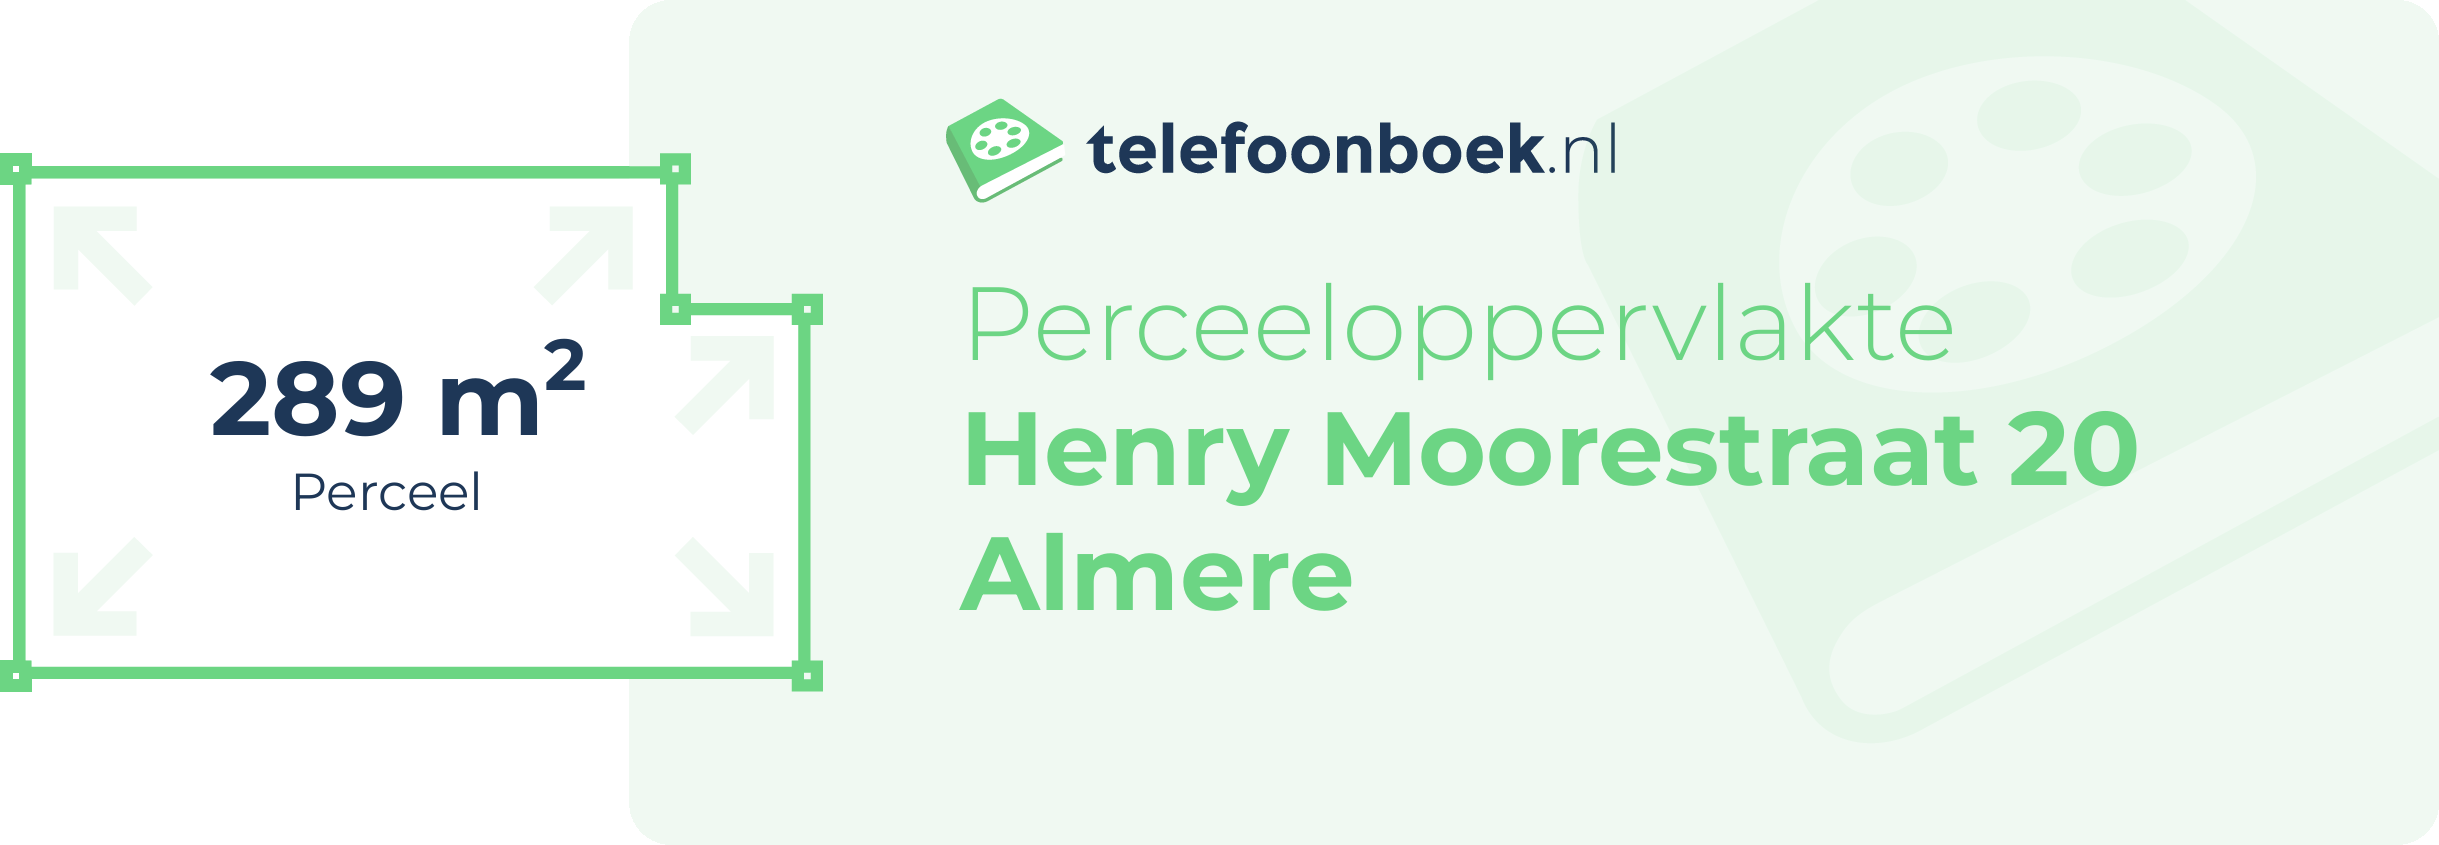 Perceeloppervlakte Henry Moorestraat 20 Almere